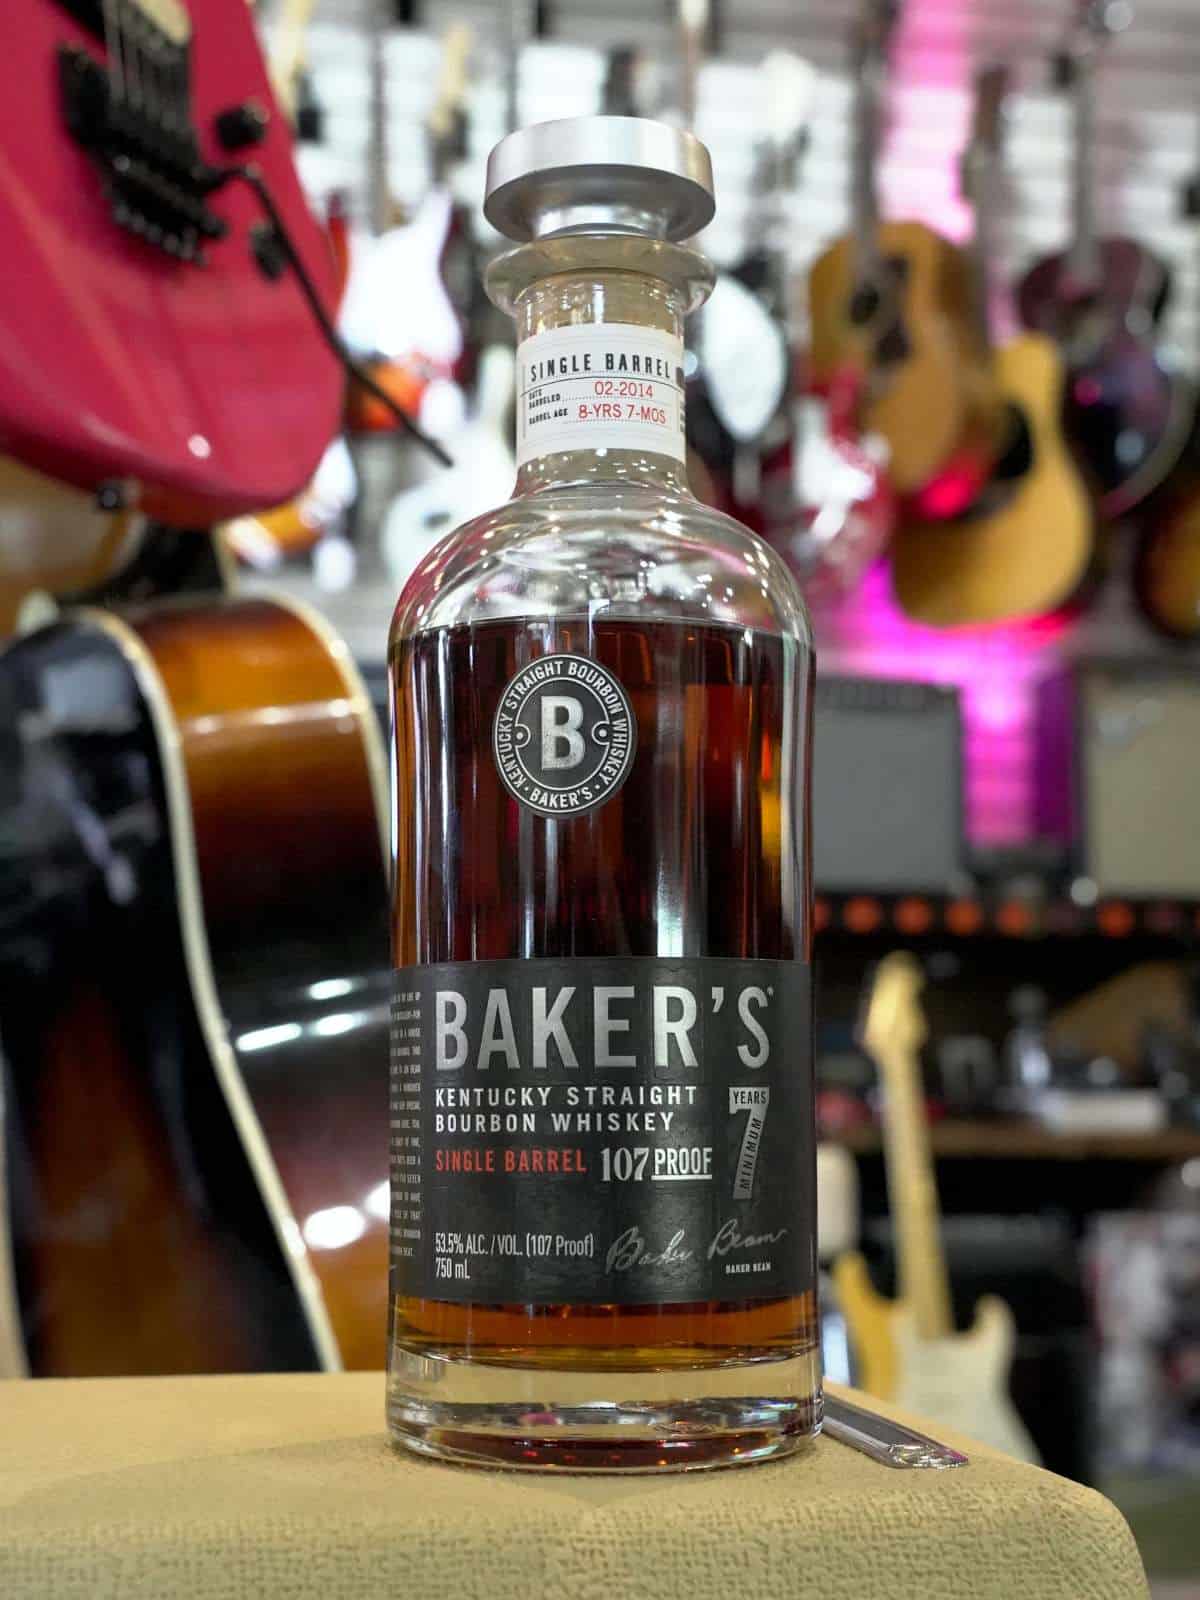 Baker’s Bourbon Single Barrel featured